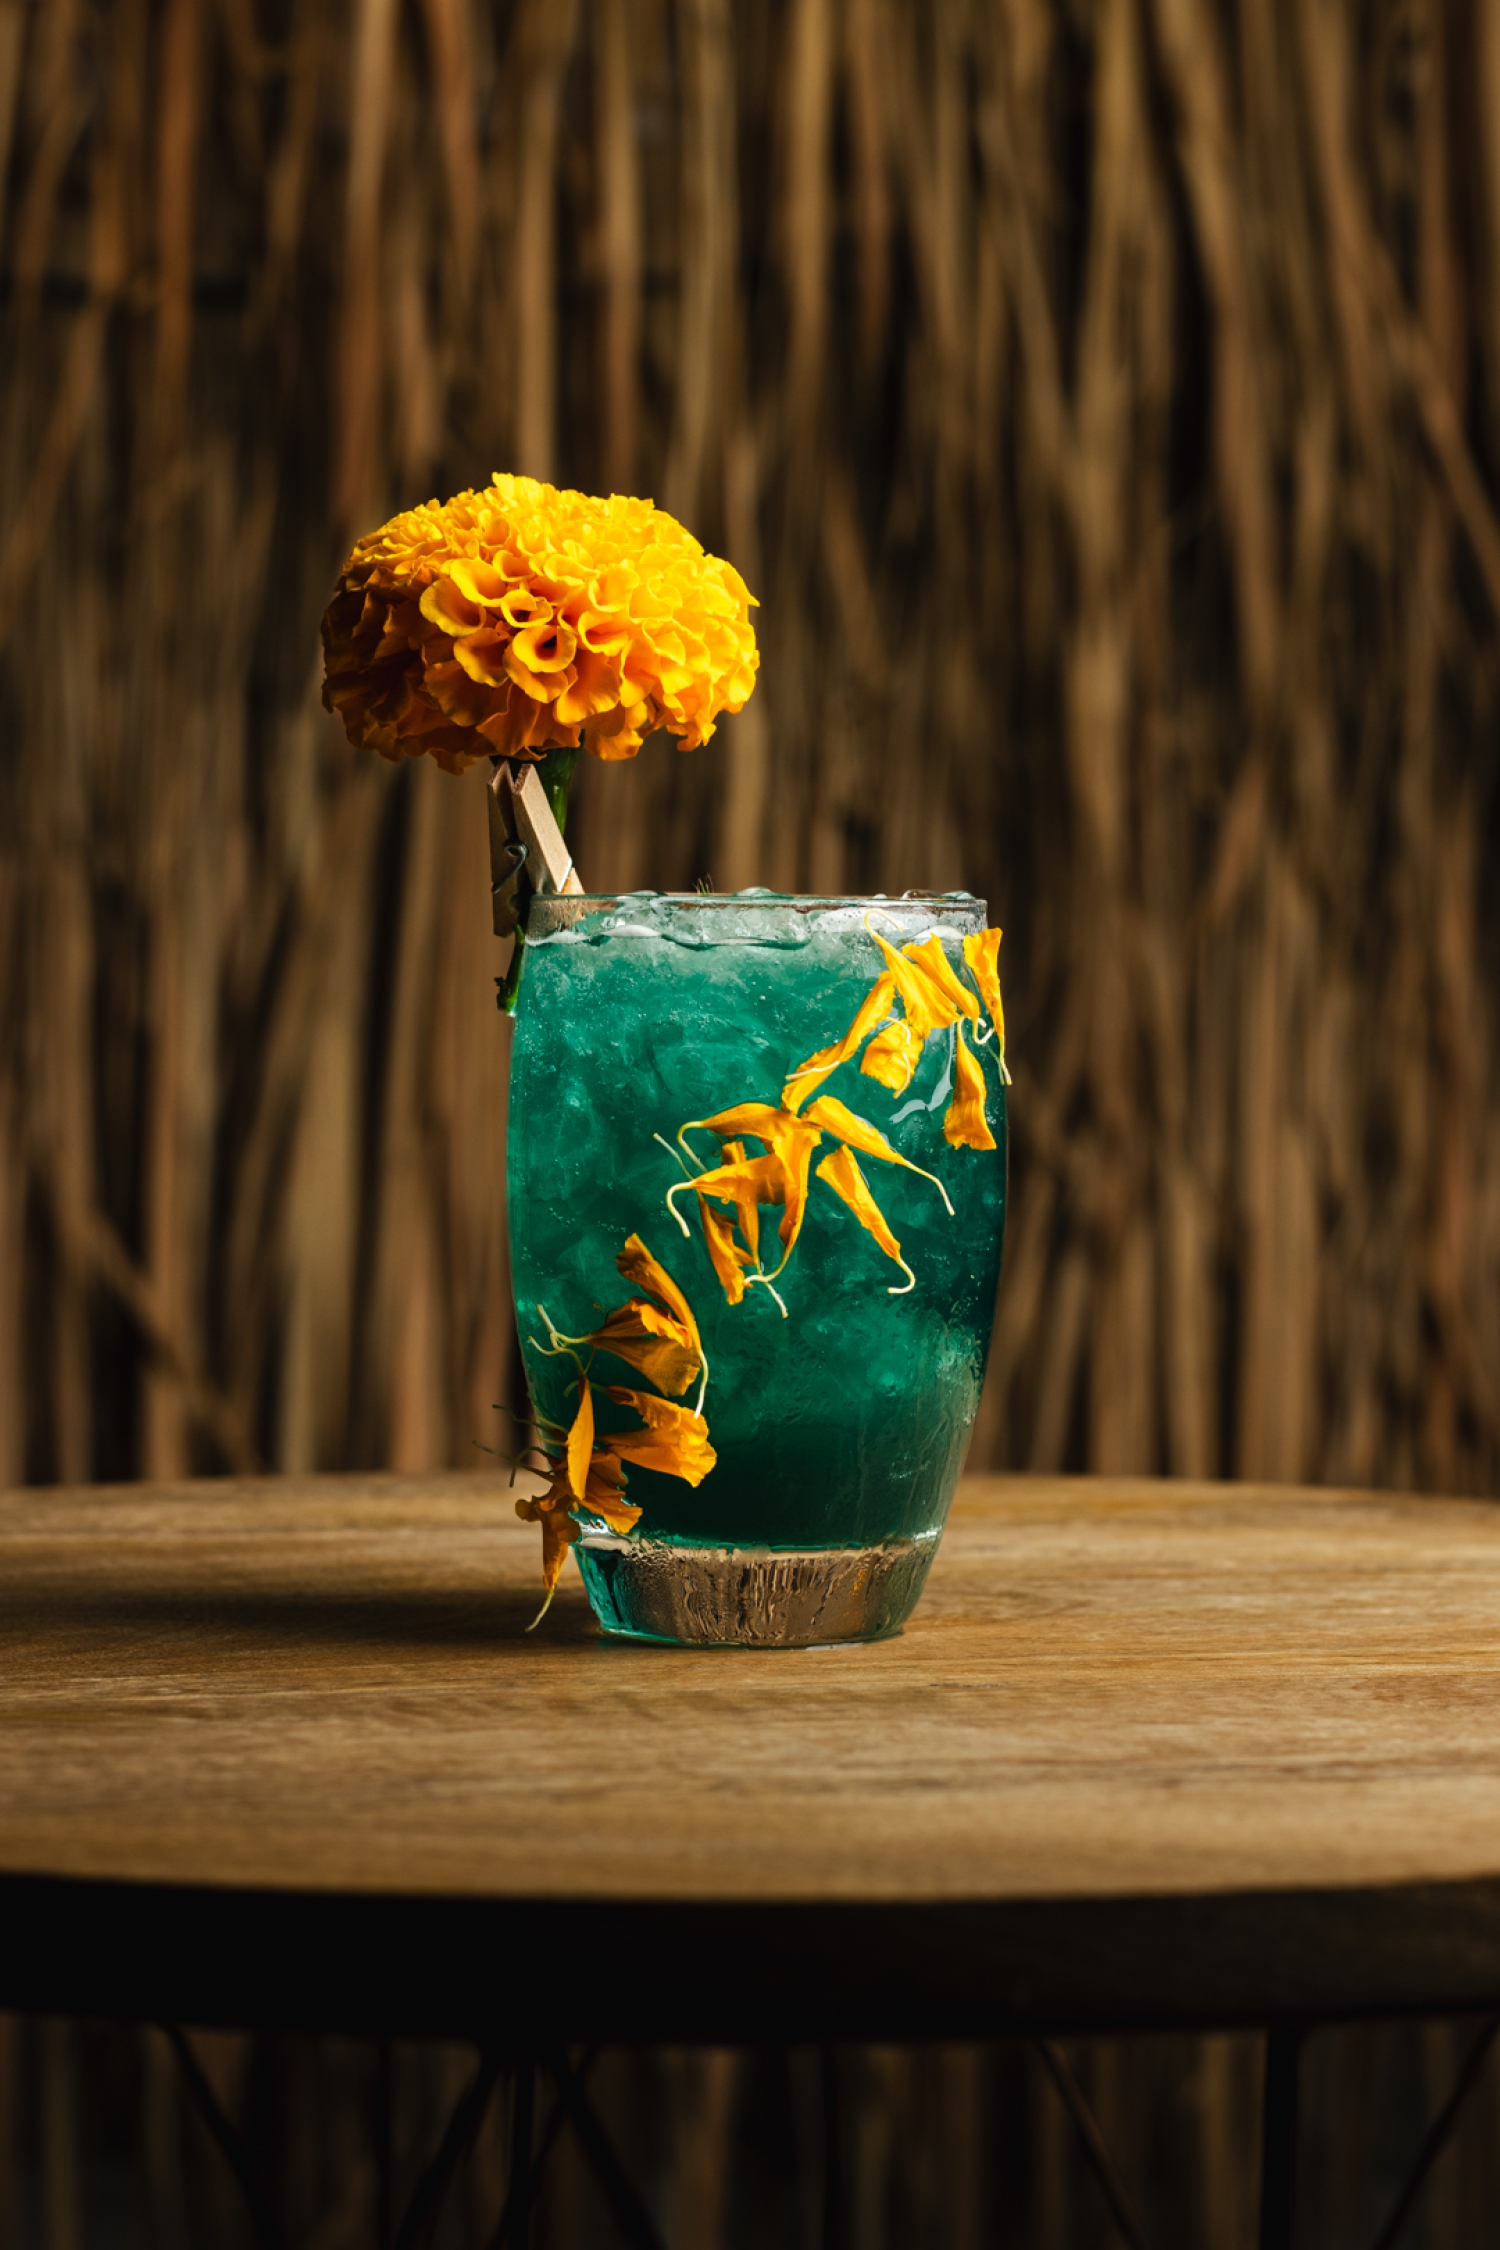 Nashira Cocktail and Gastrobar